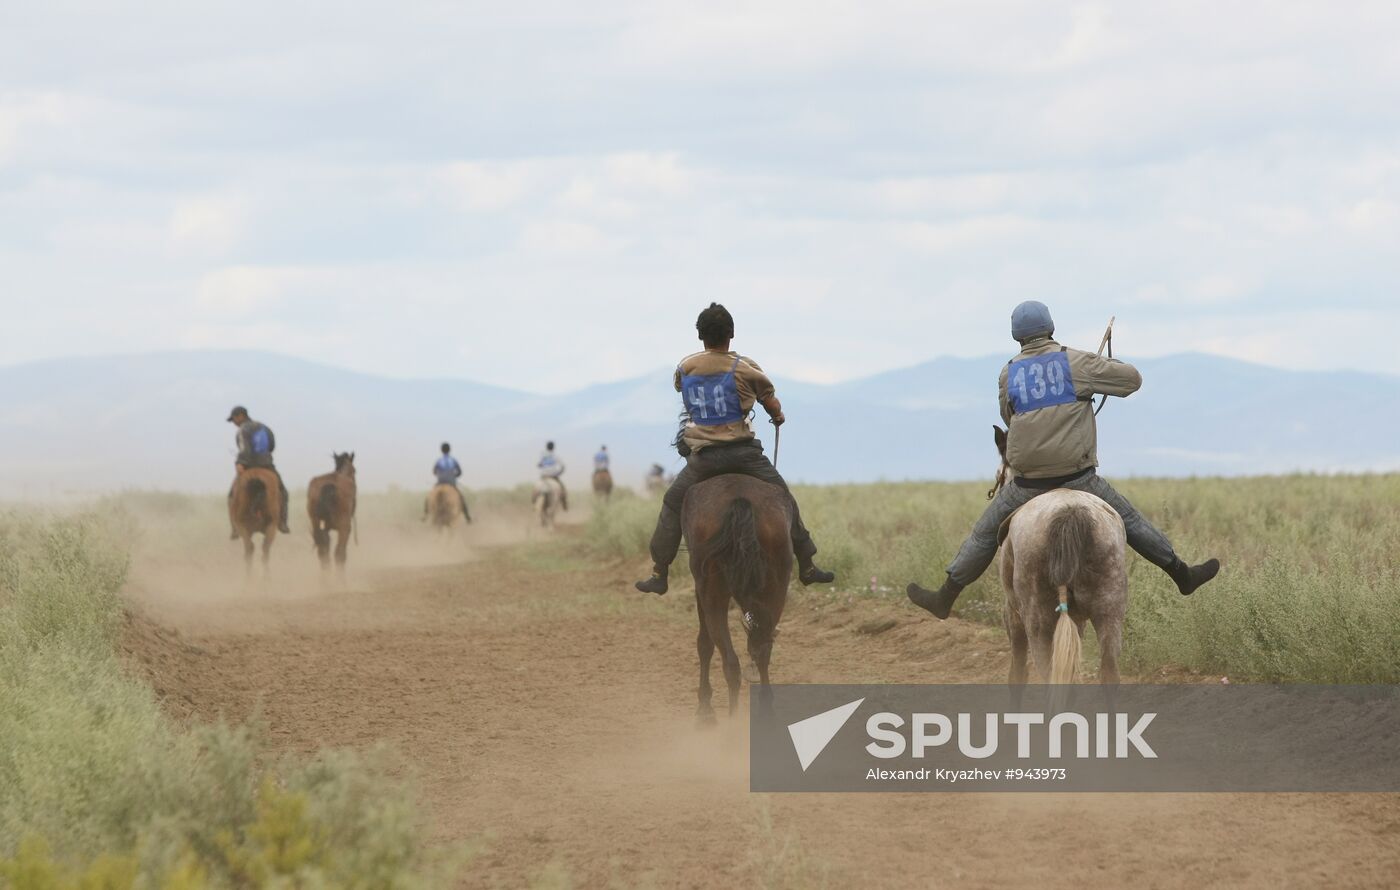 Tuvan horse racing championship